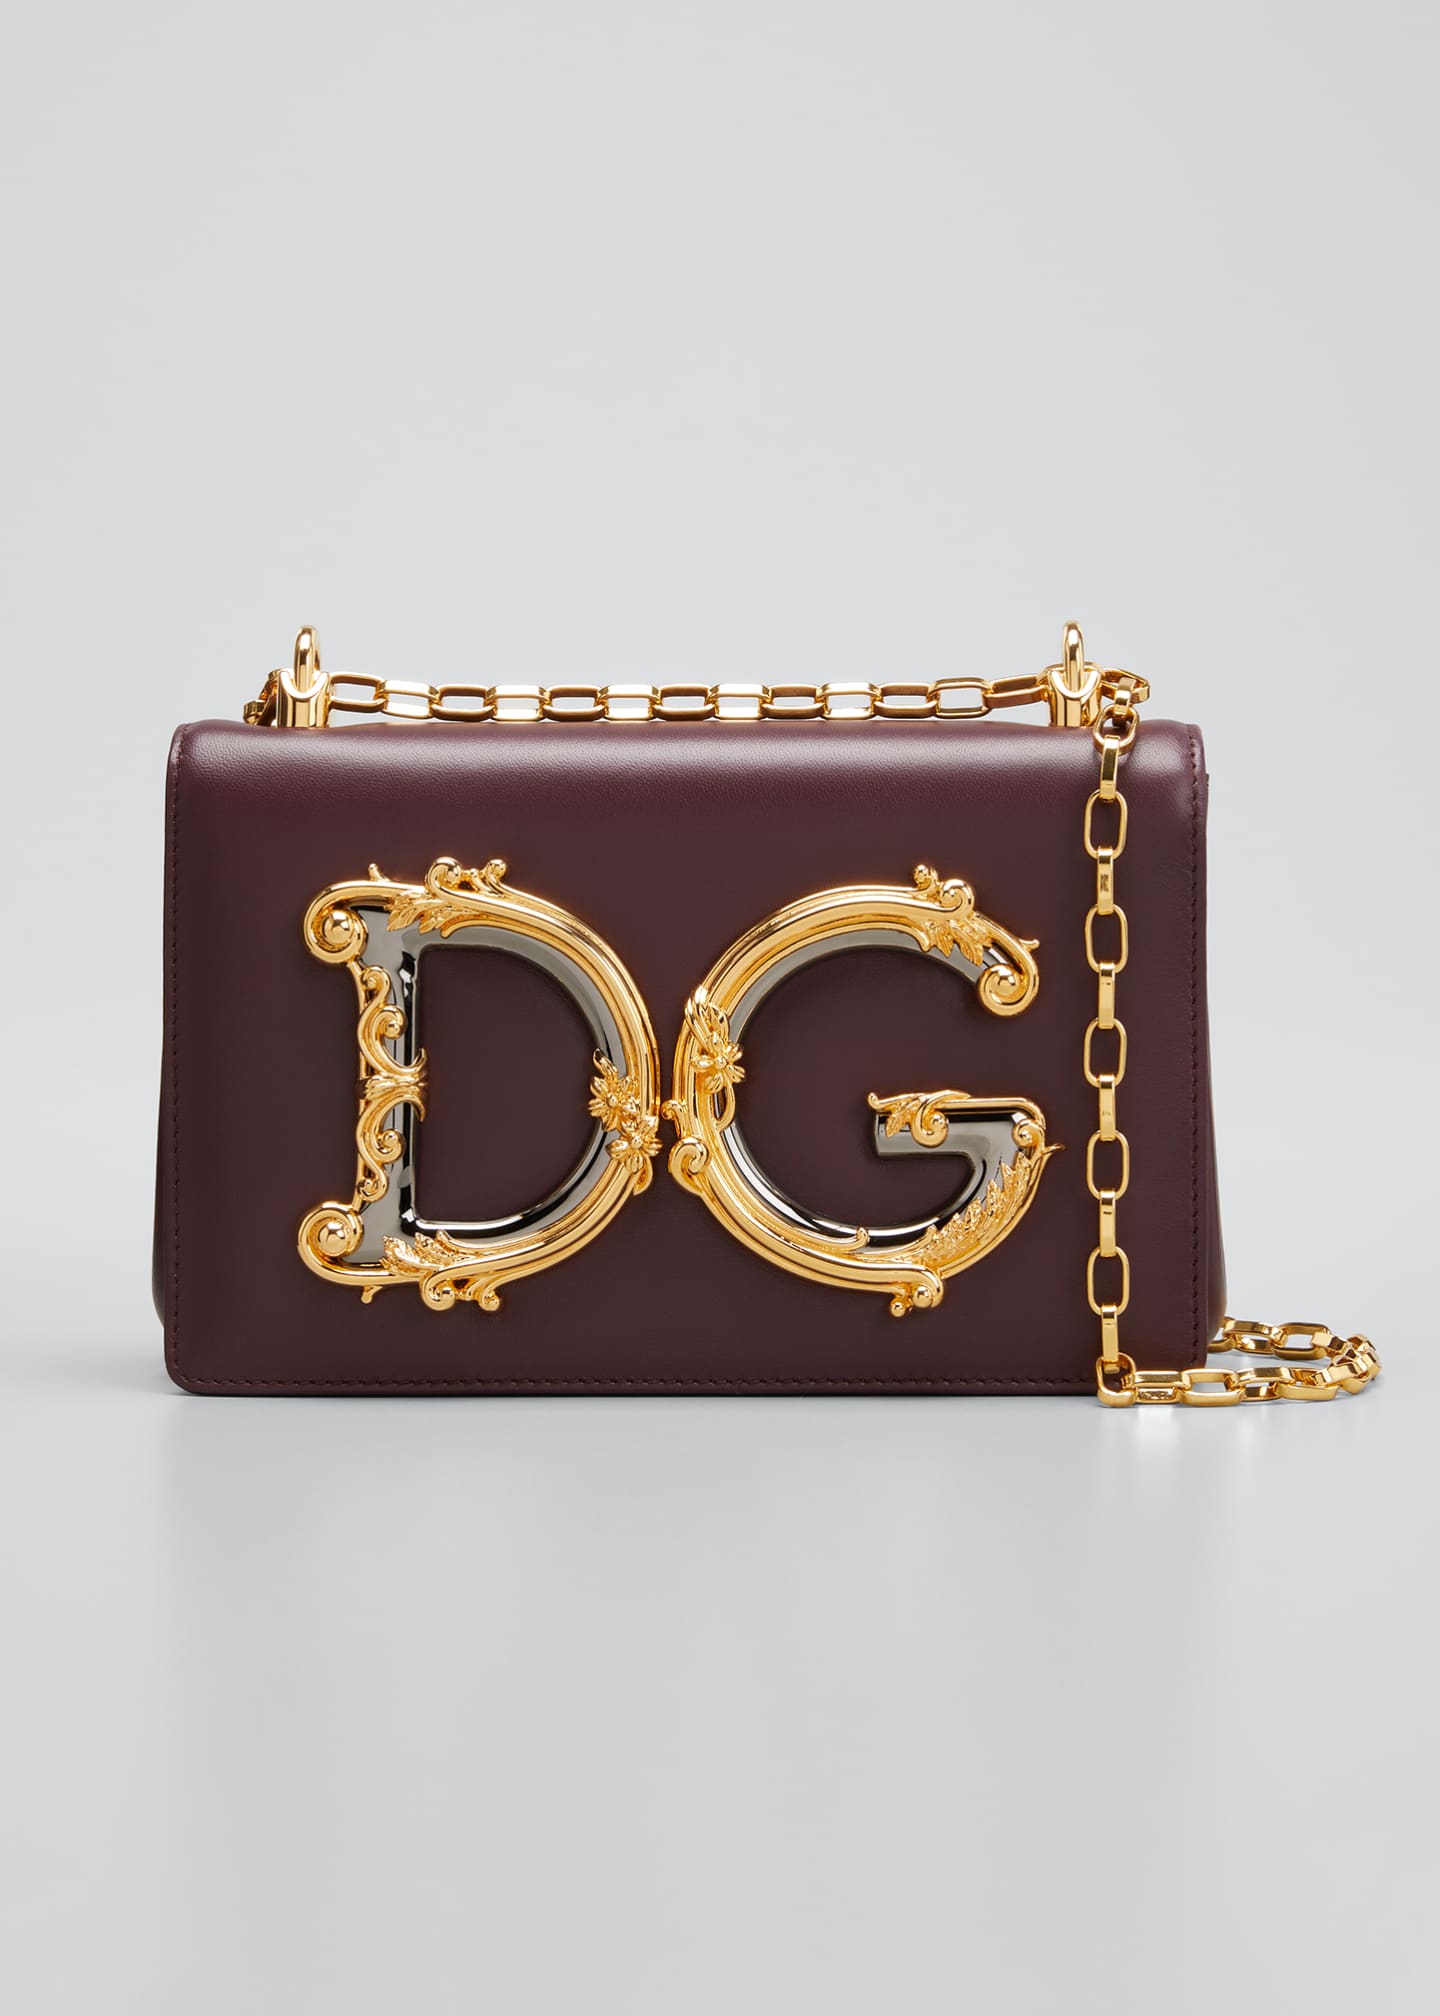 Dolce & Gabbana Baroque Small Leather Crossbody Bag - Bergdorf Goodman